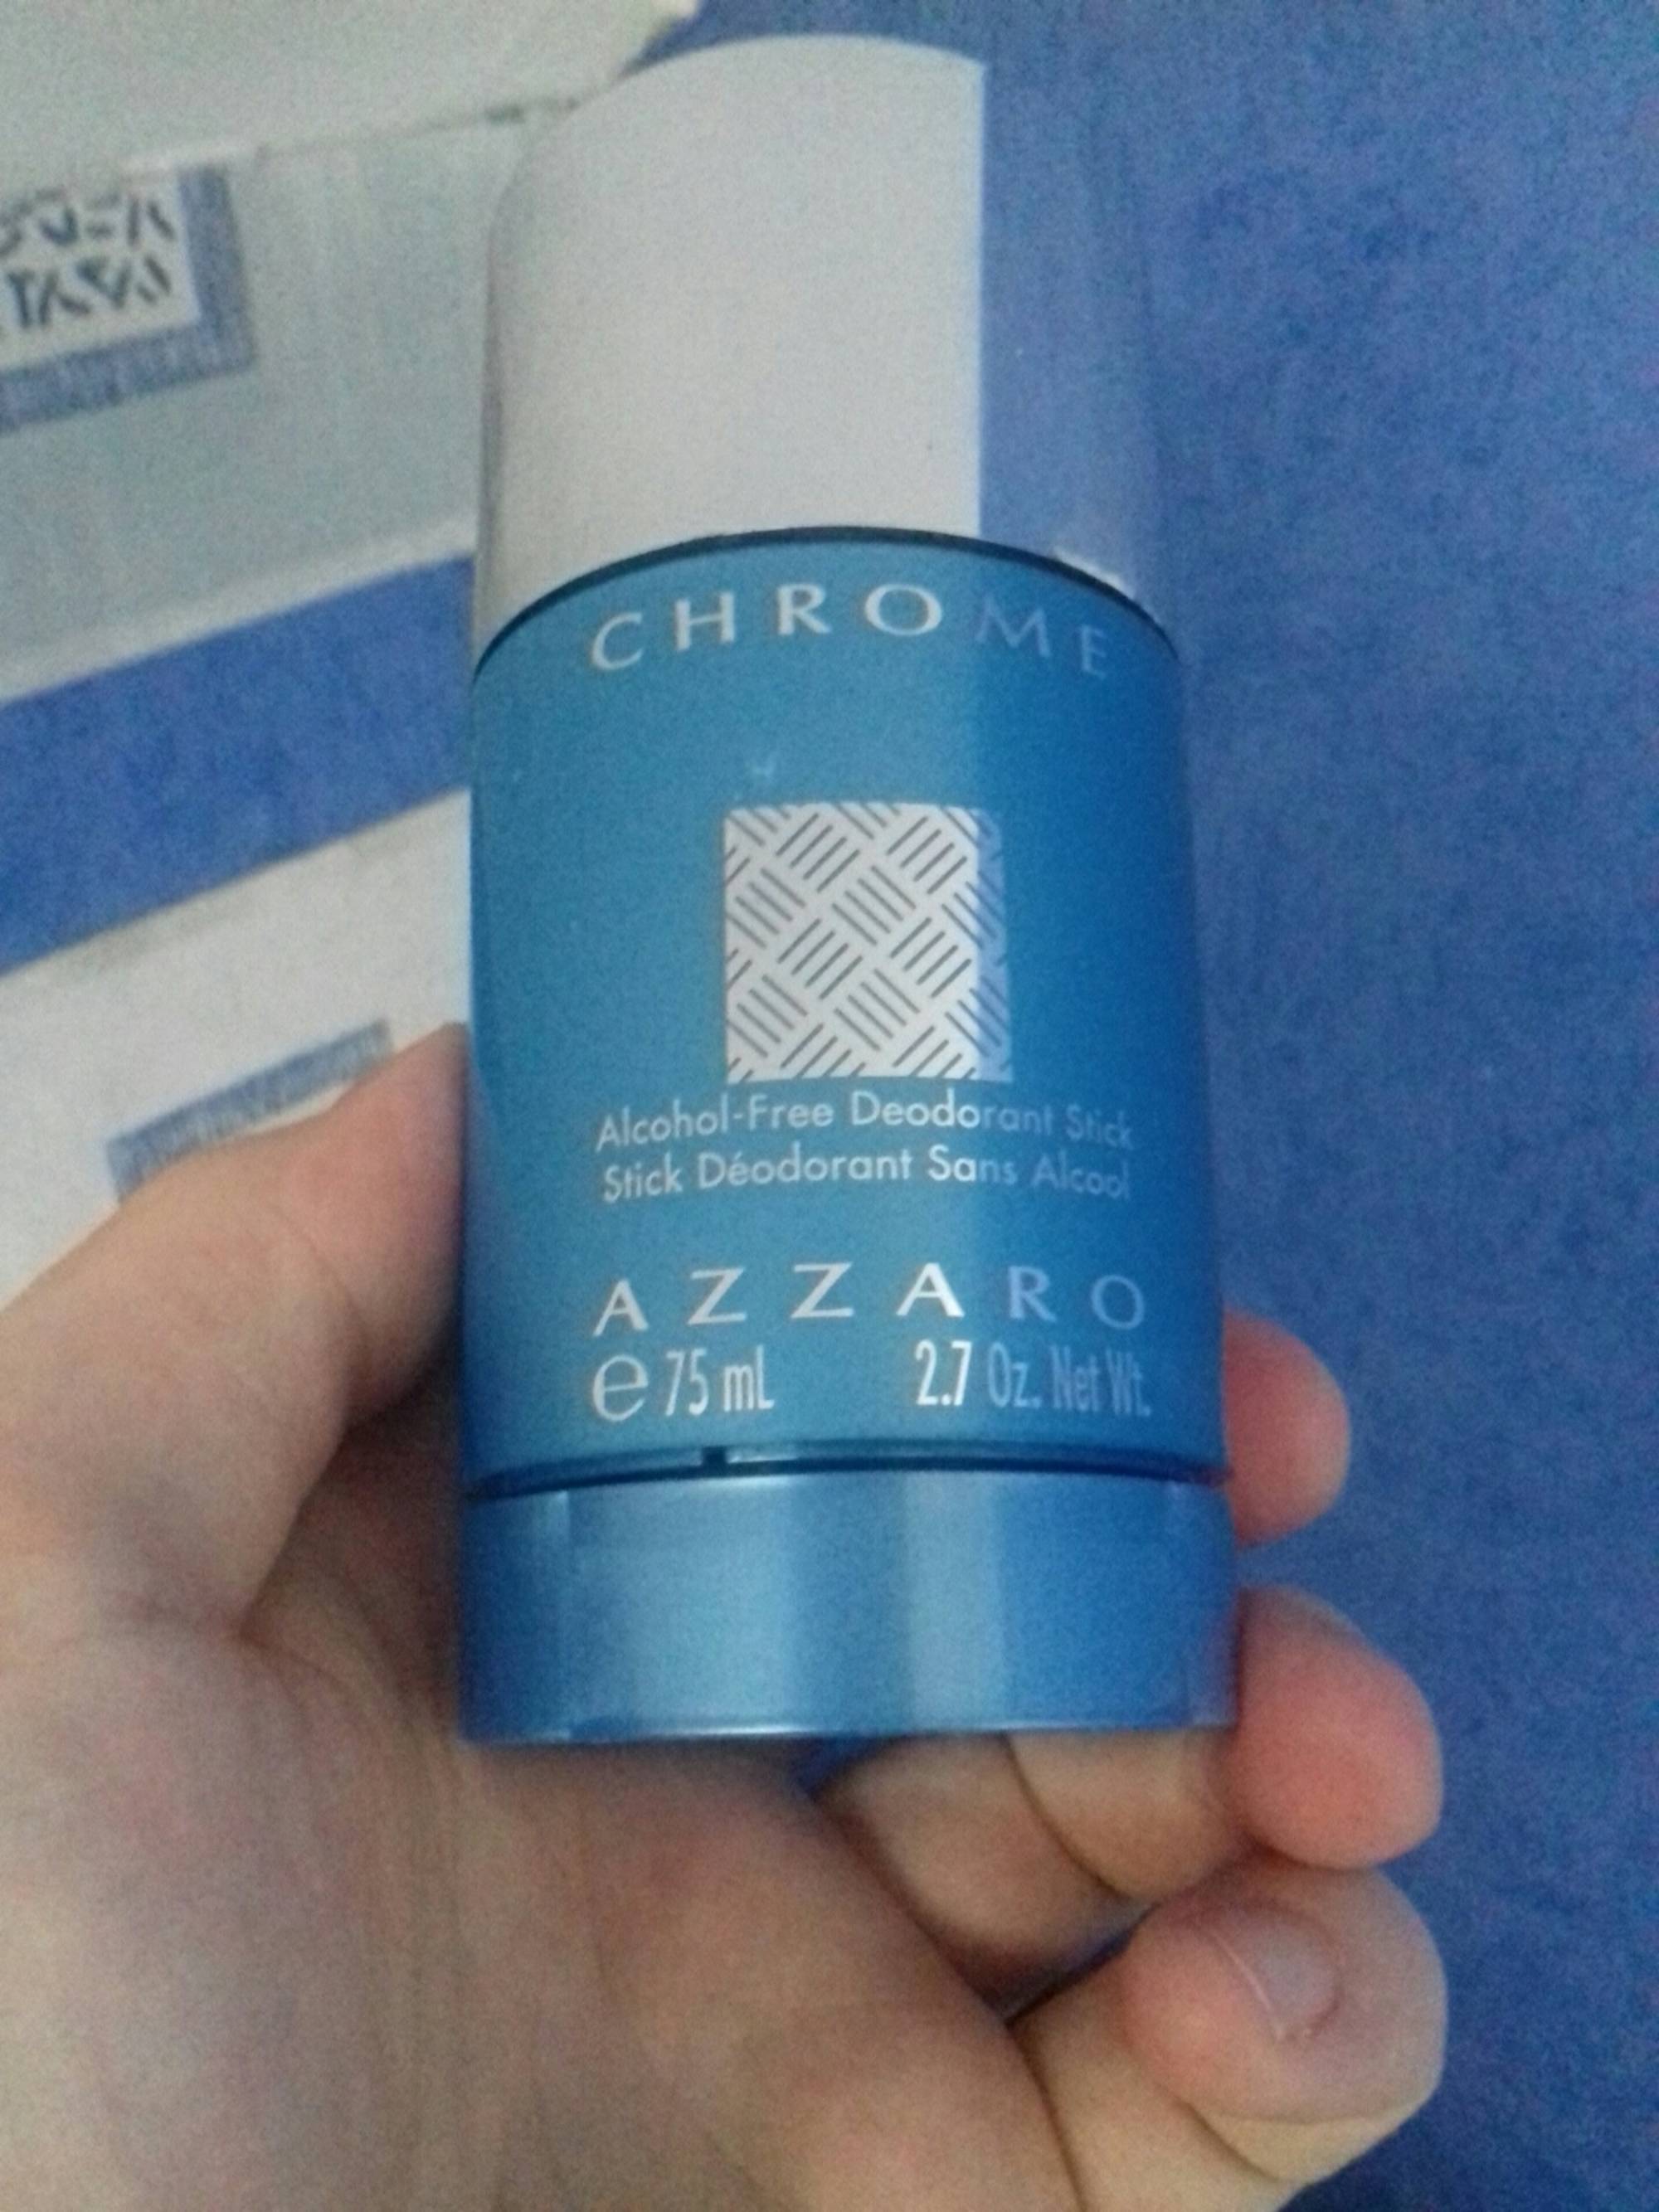 AZZARO - Chrome - Alcohol-free deodorant stick 